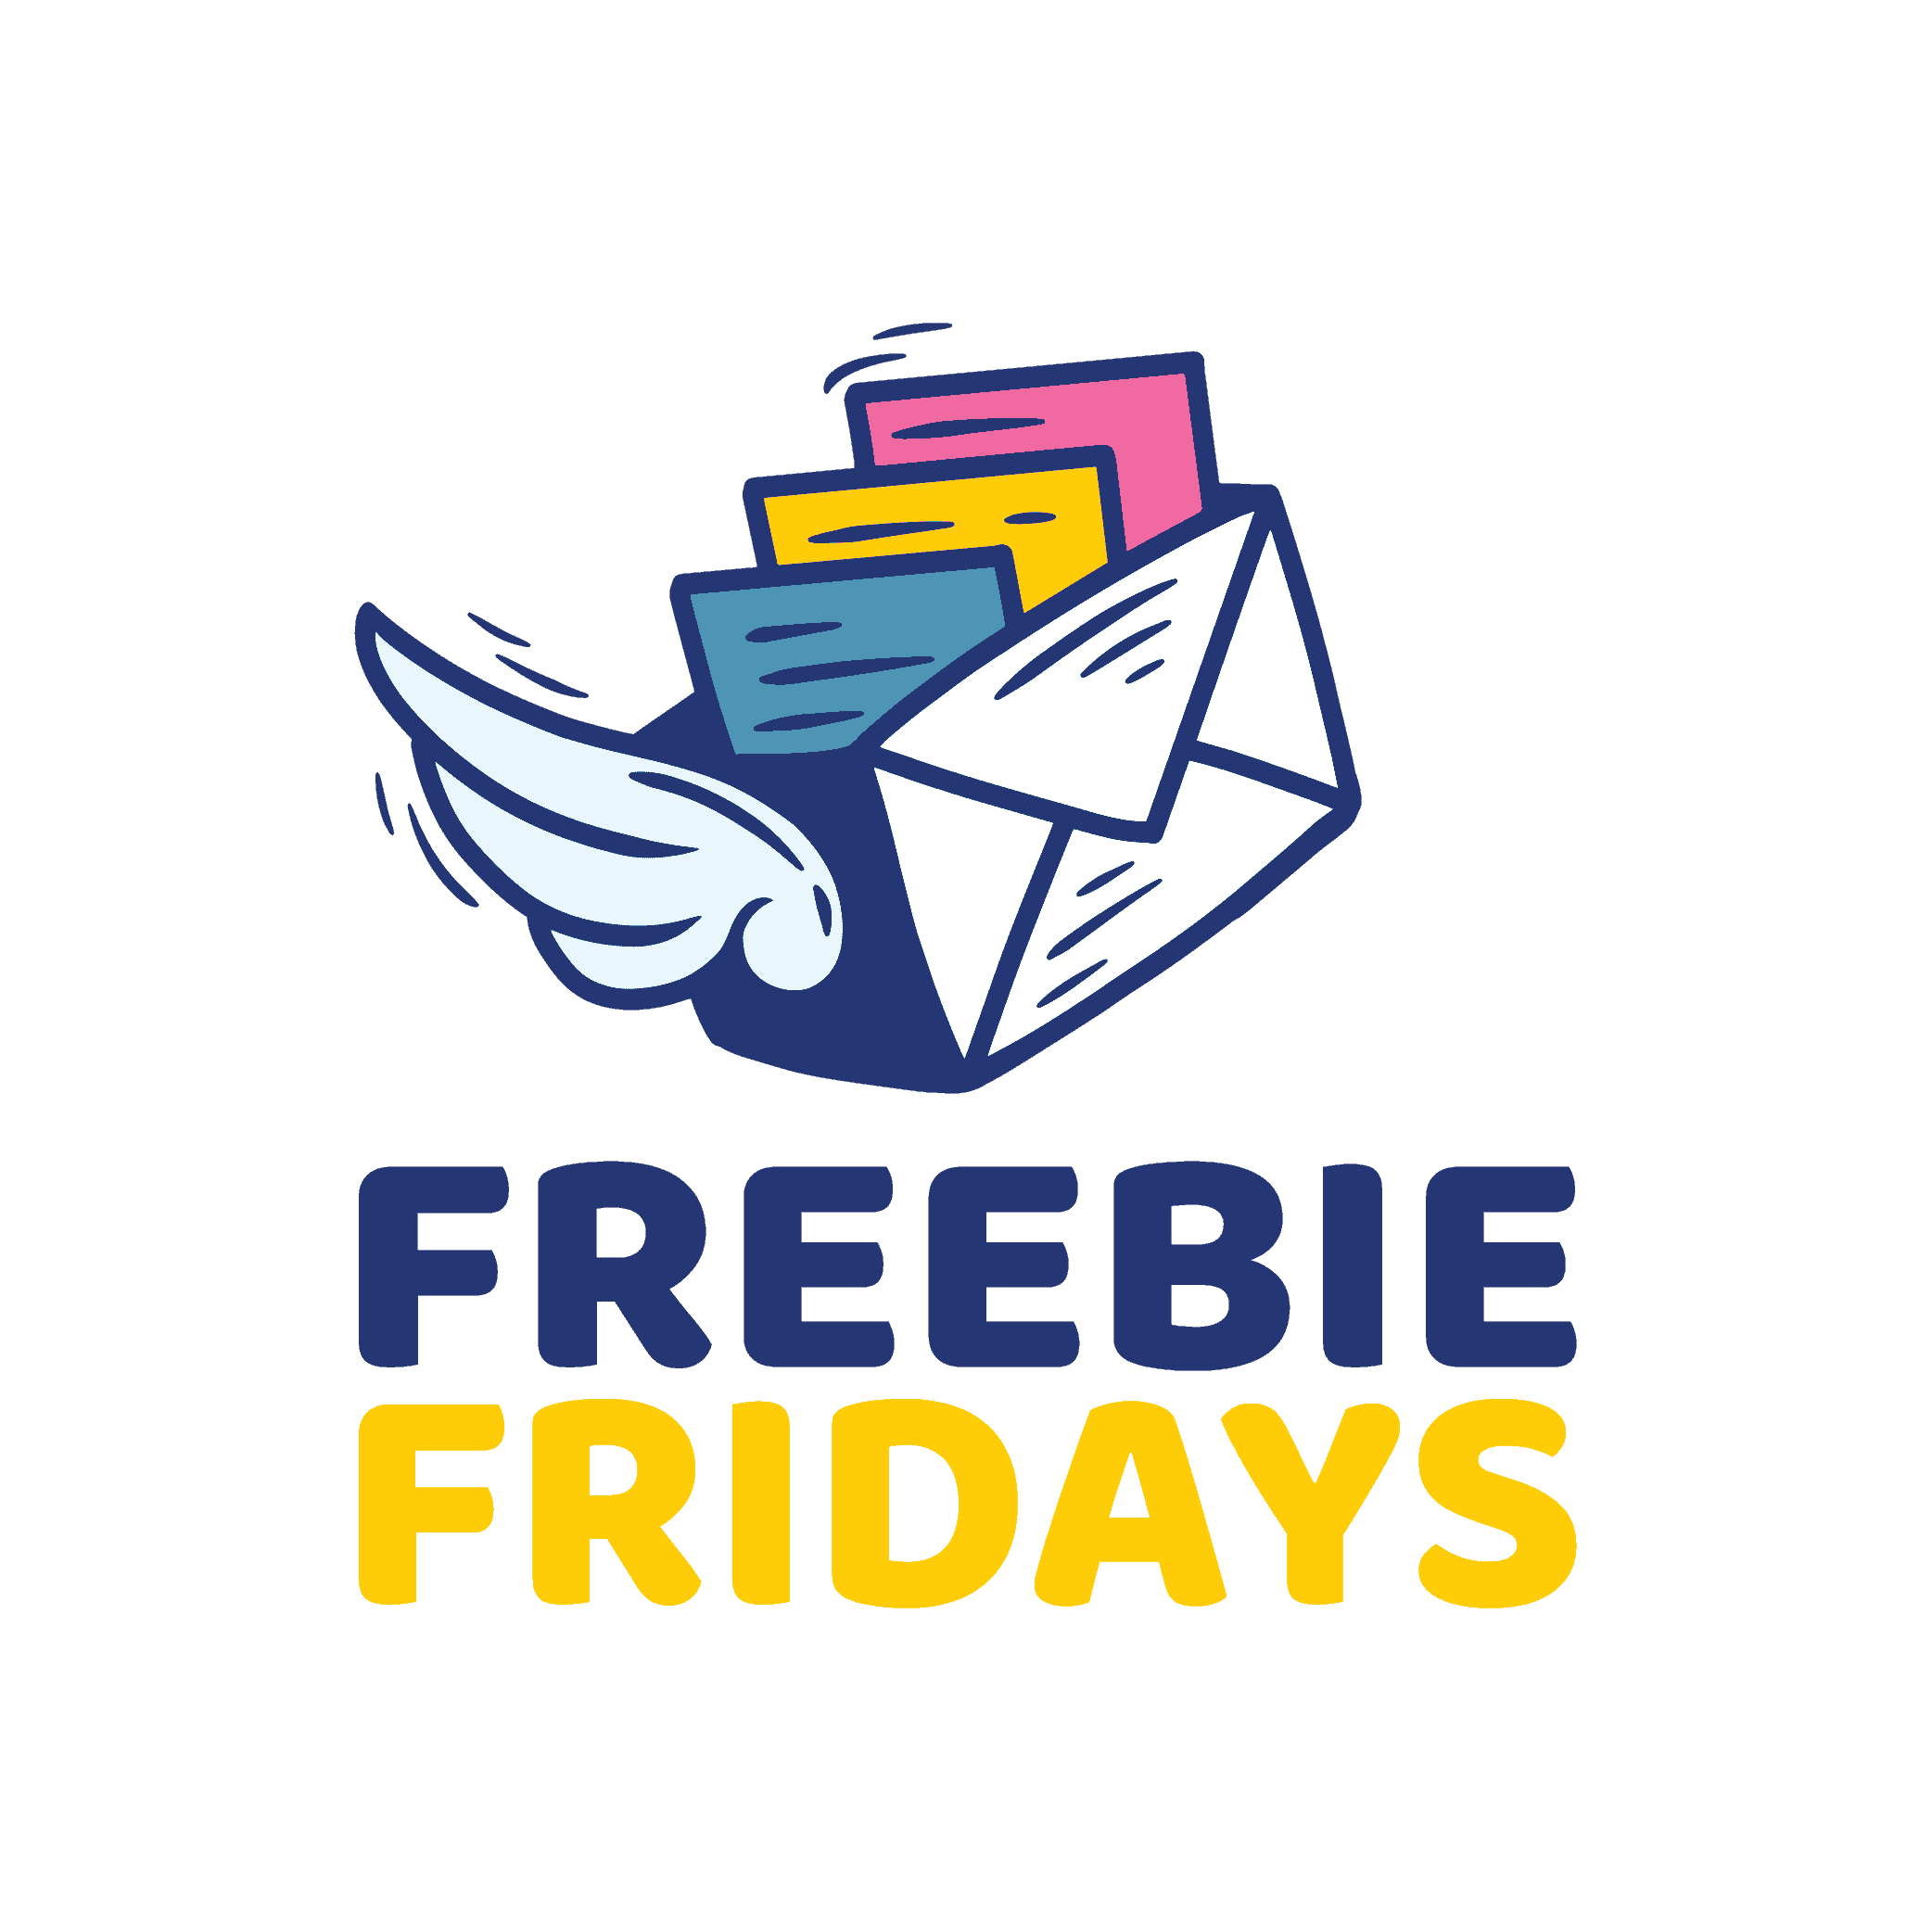 Freebie Fridays